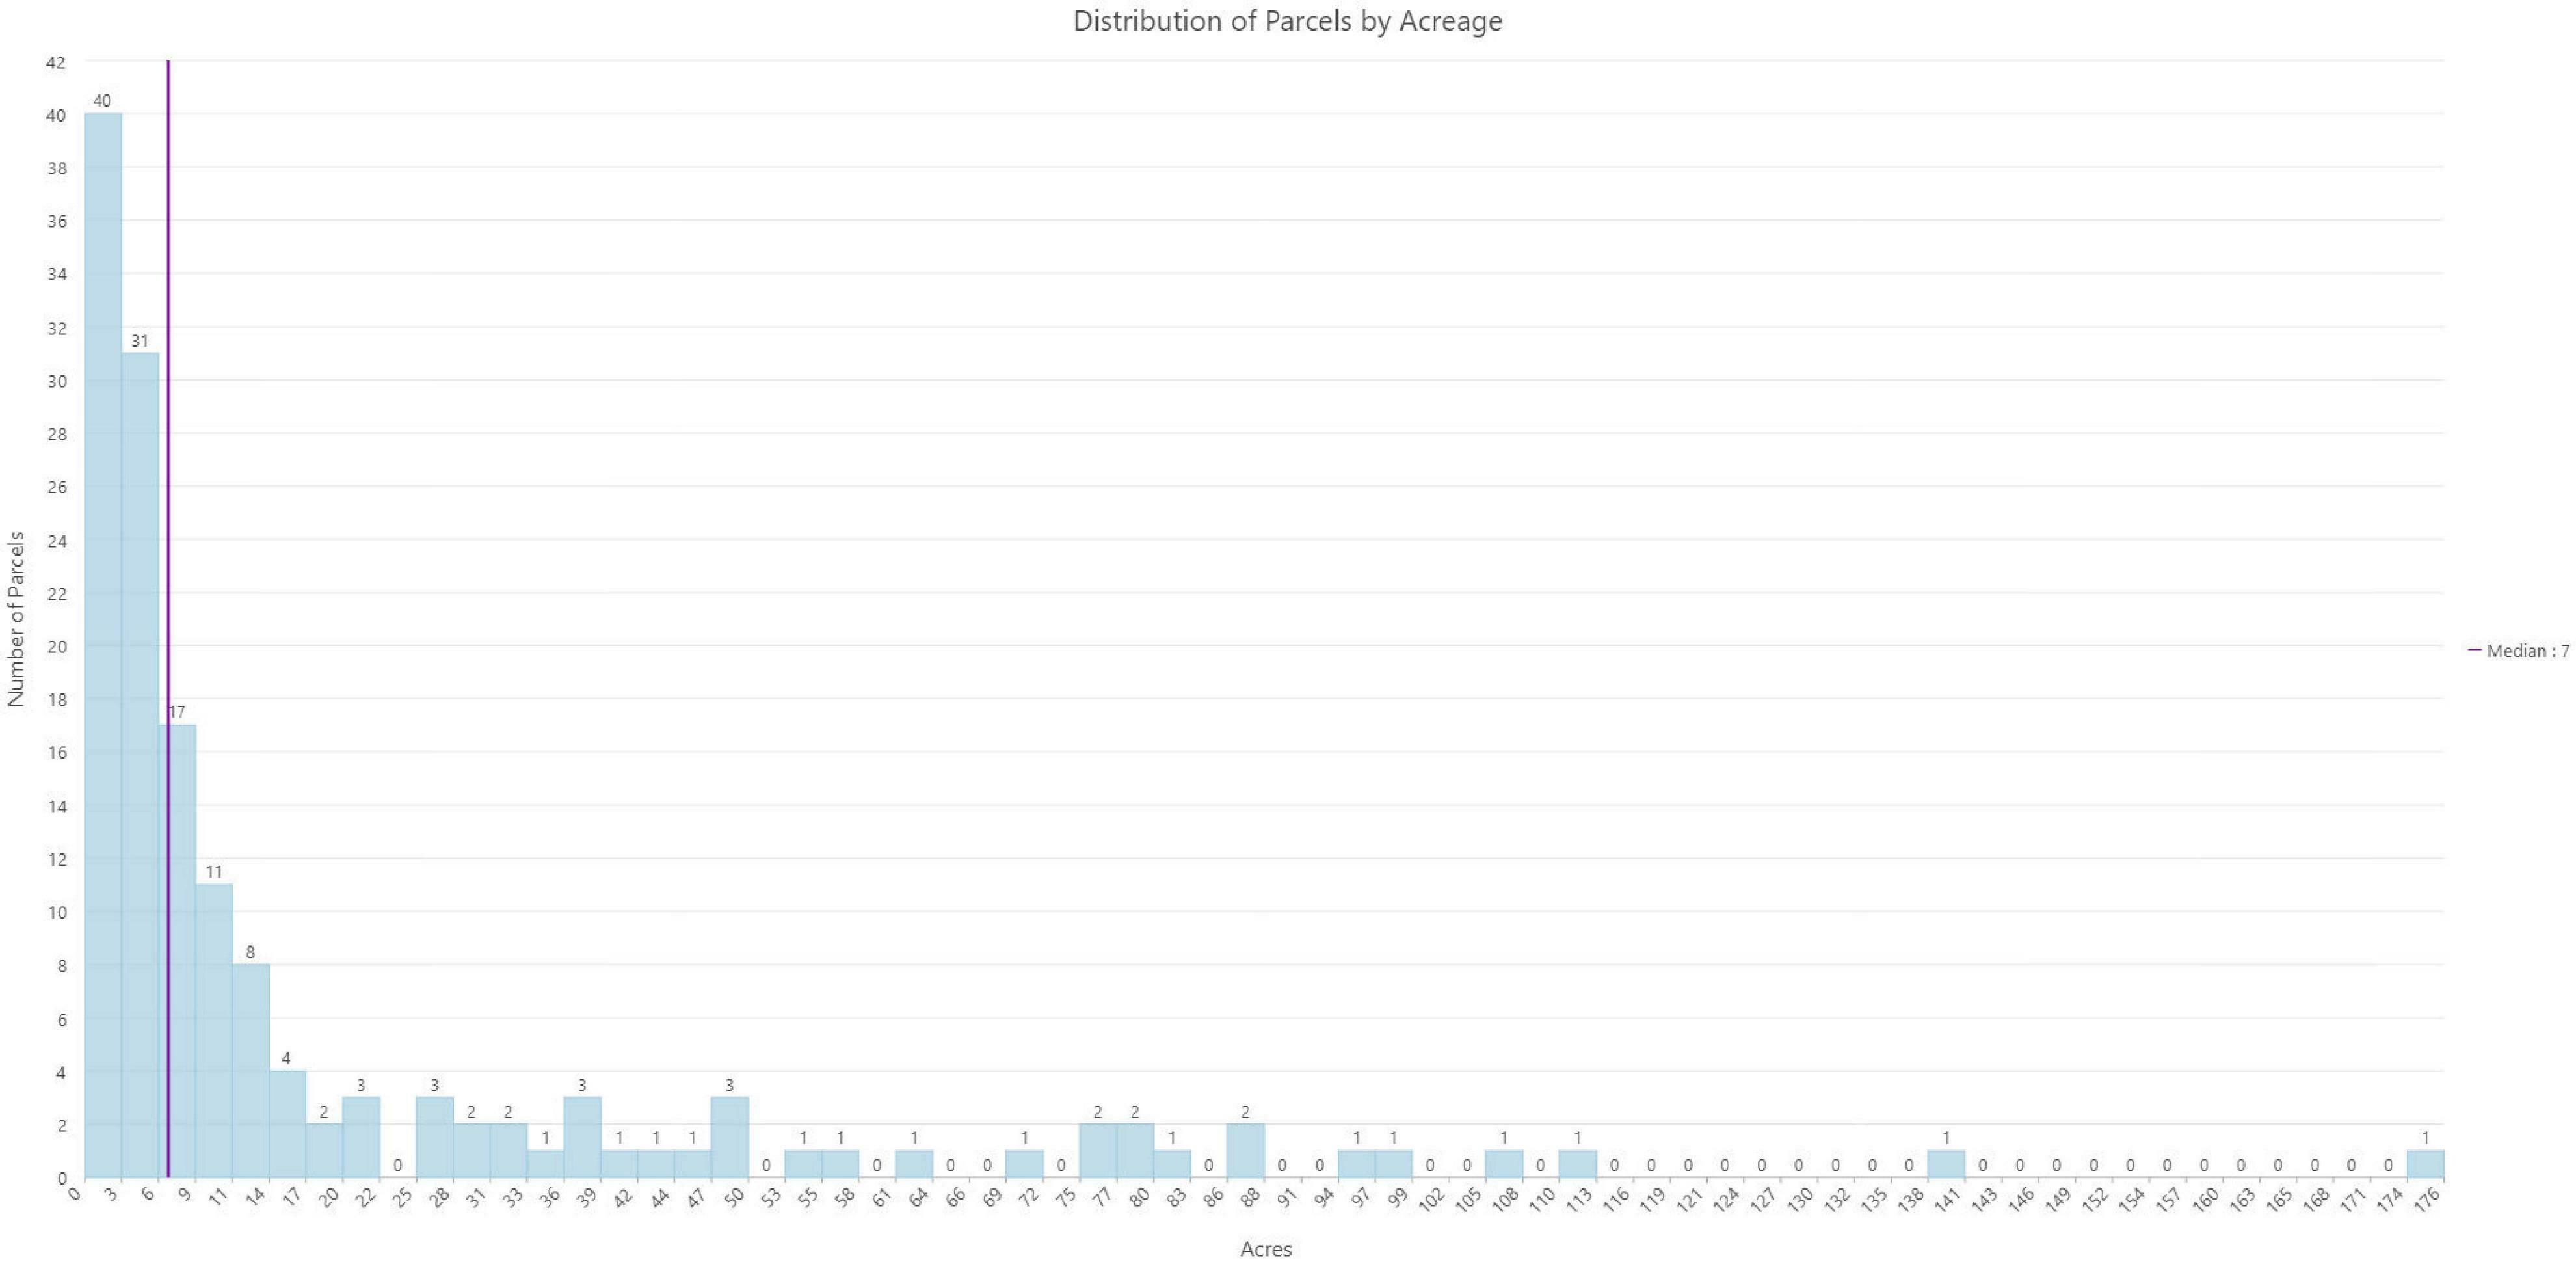 Number of Parcels/Acres Bar Graph